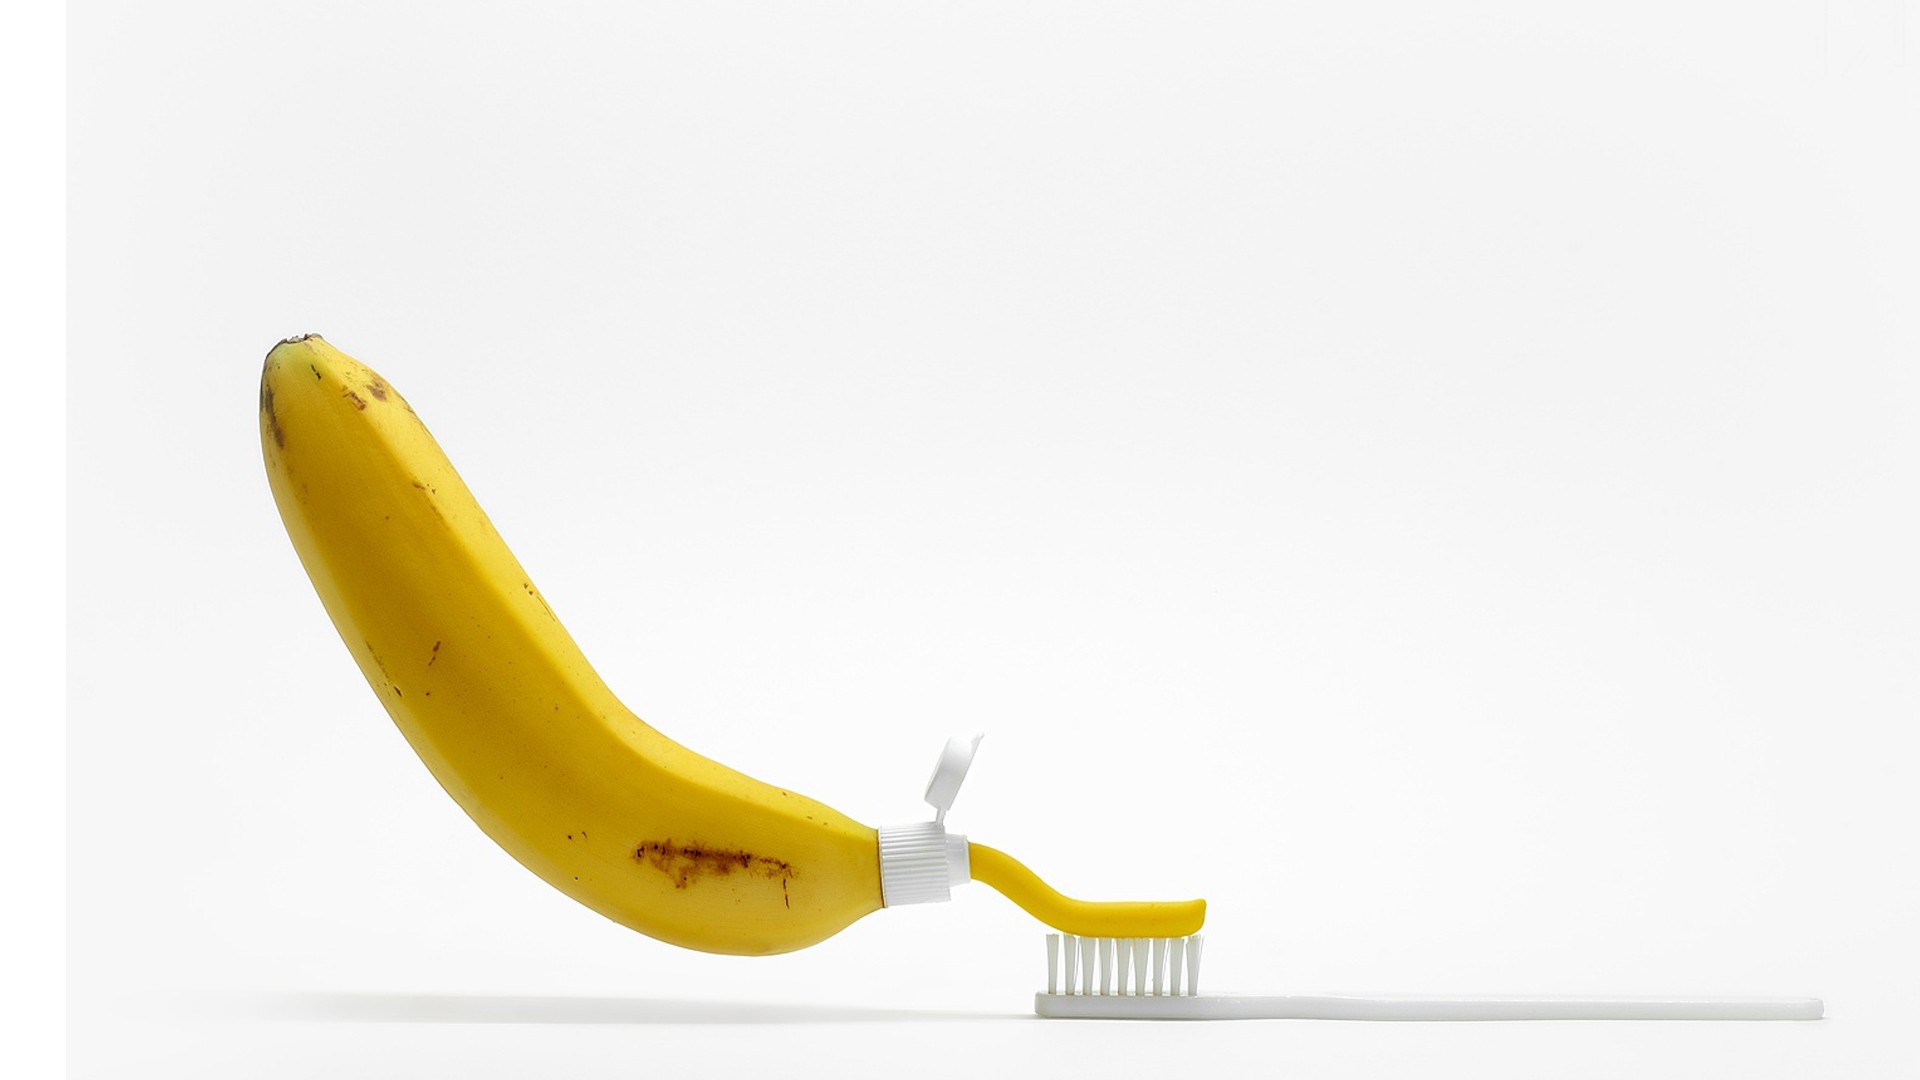 General 1920x1080 humor minimalism bananas toothbrush white background fruit yellow food Toothpaste digital art simple background